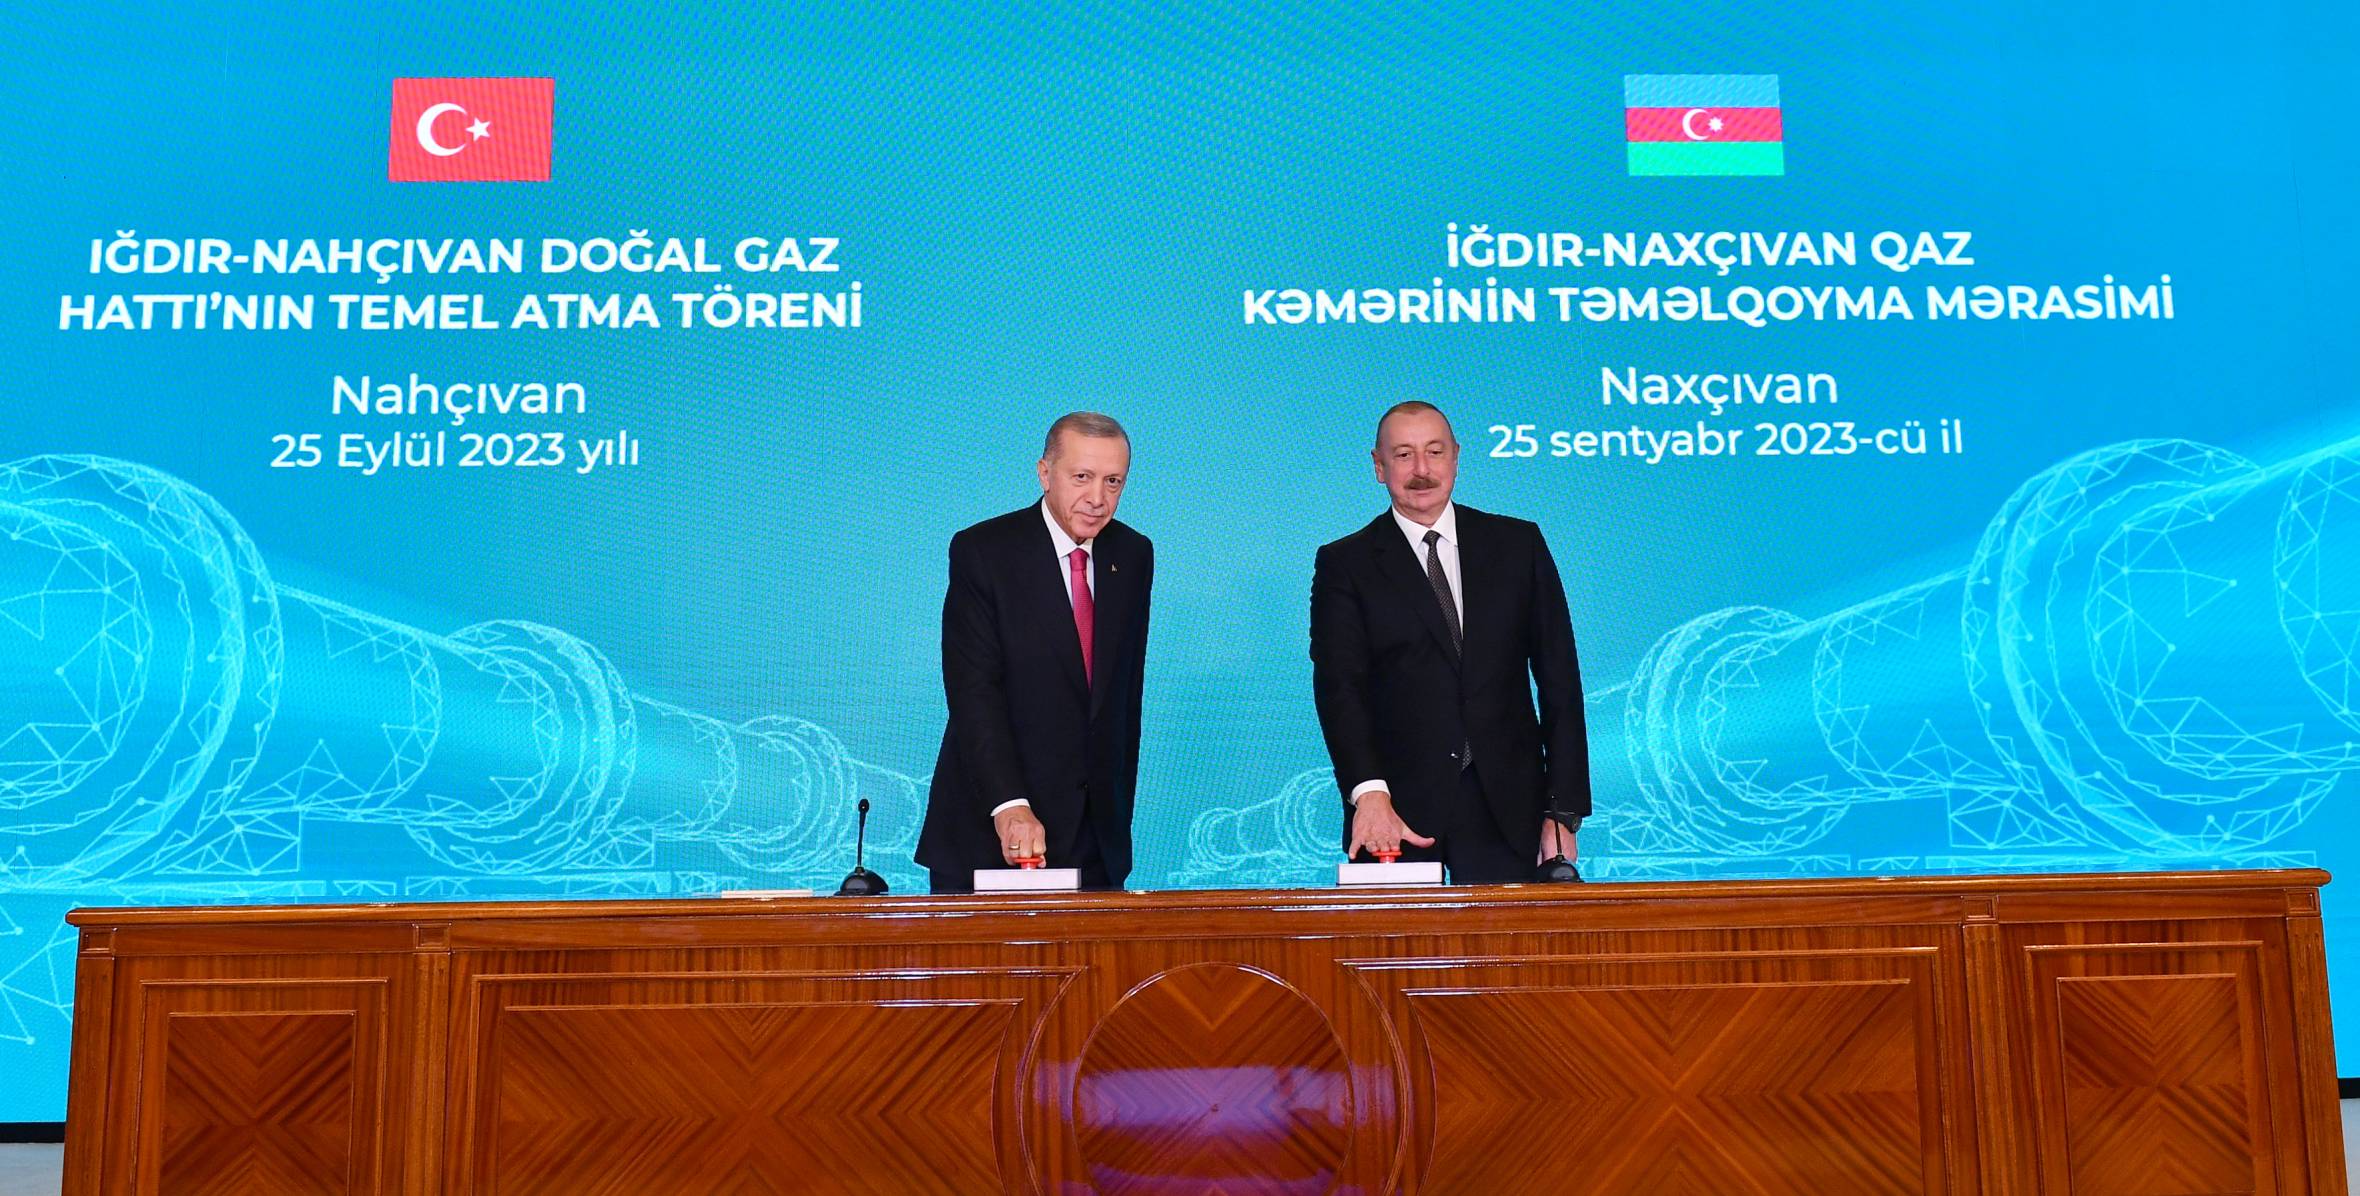 Ilham Aliyev and President Recep Tayyip Erdogan attended groundbreaking ceremony for Igdir-Nakhchivan gas pipeline